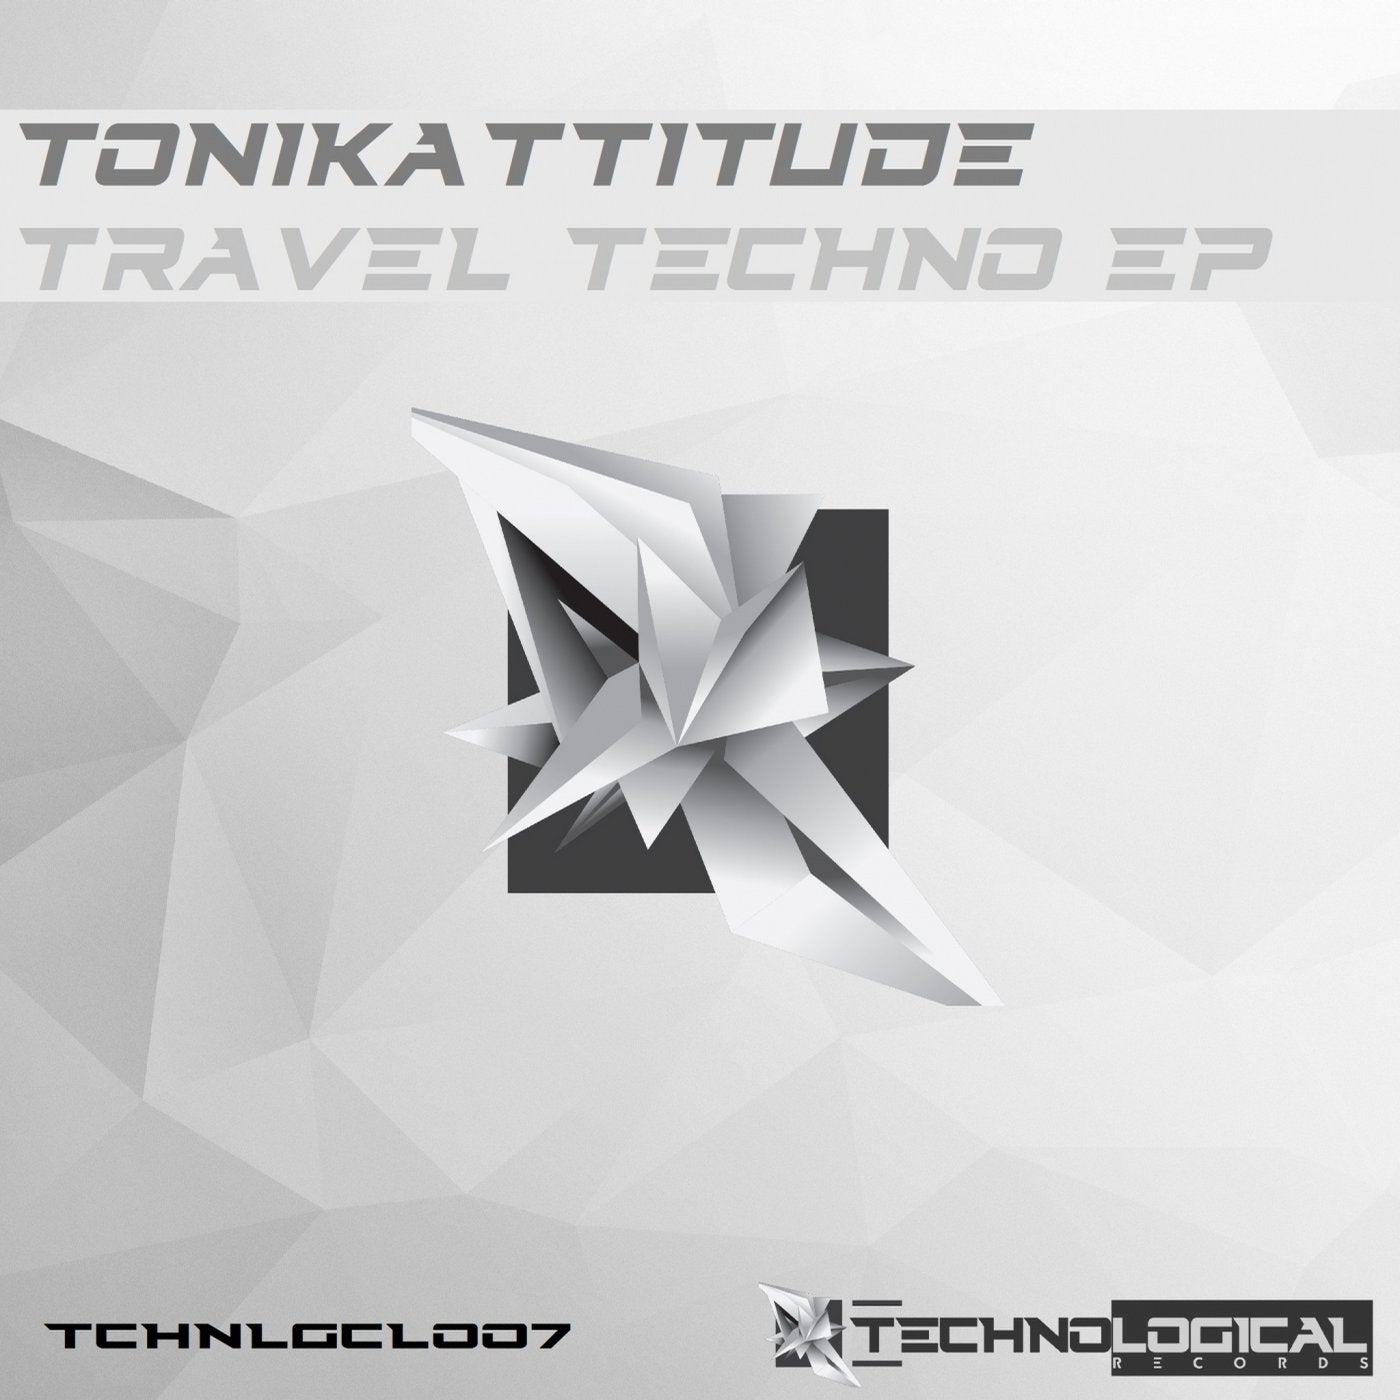 Travel Techno EP